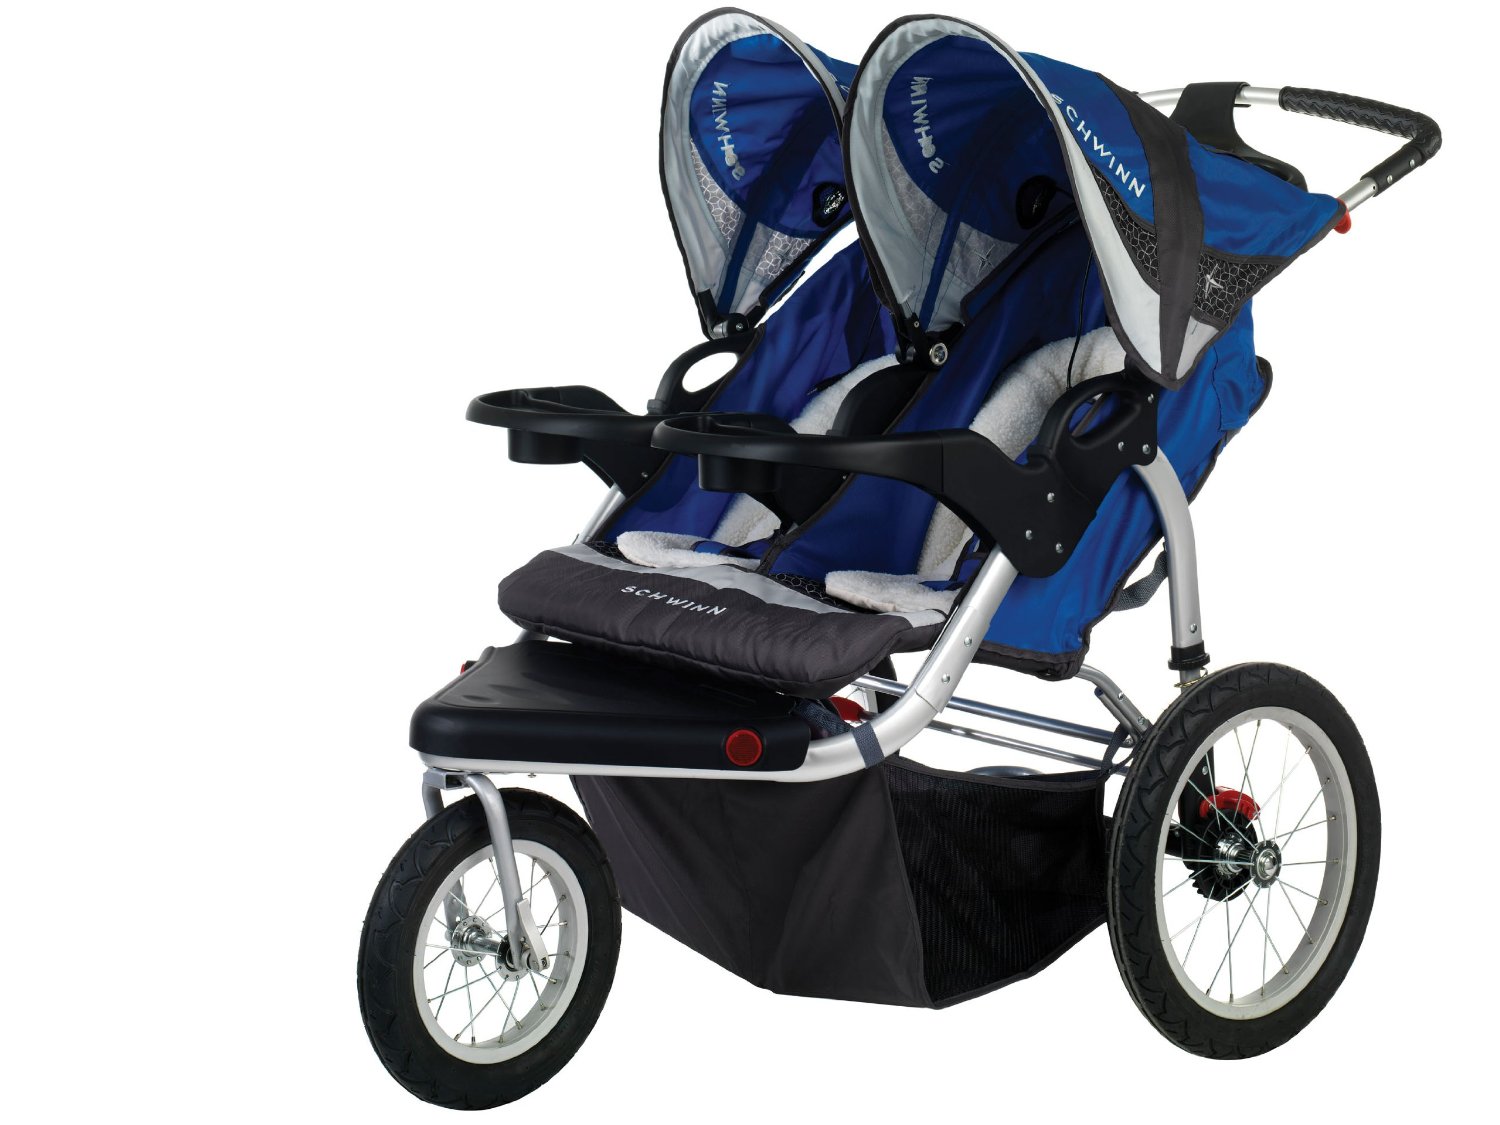 buy buy baby jogging stroller